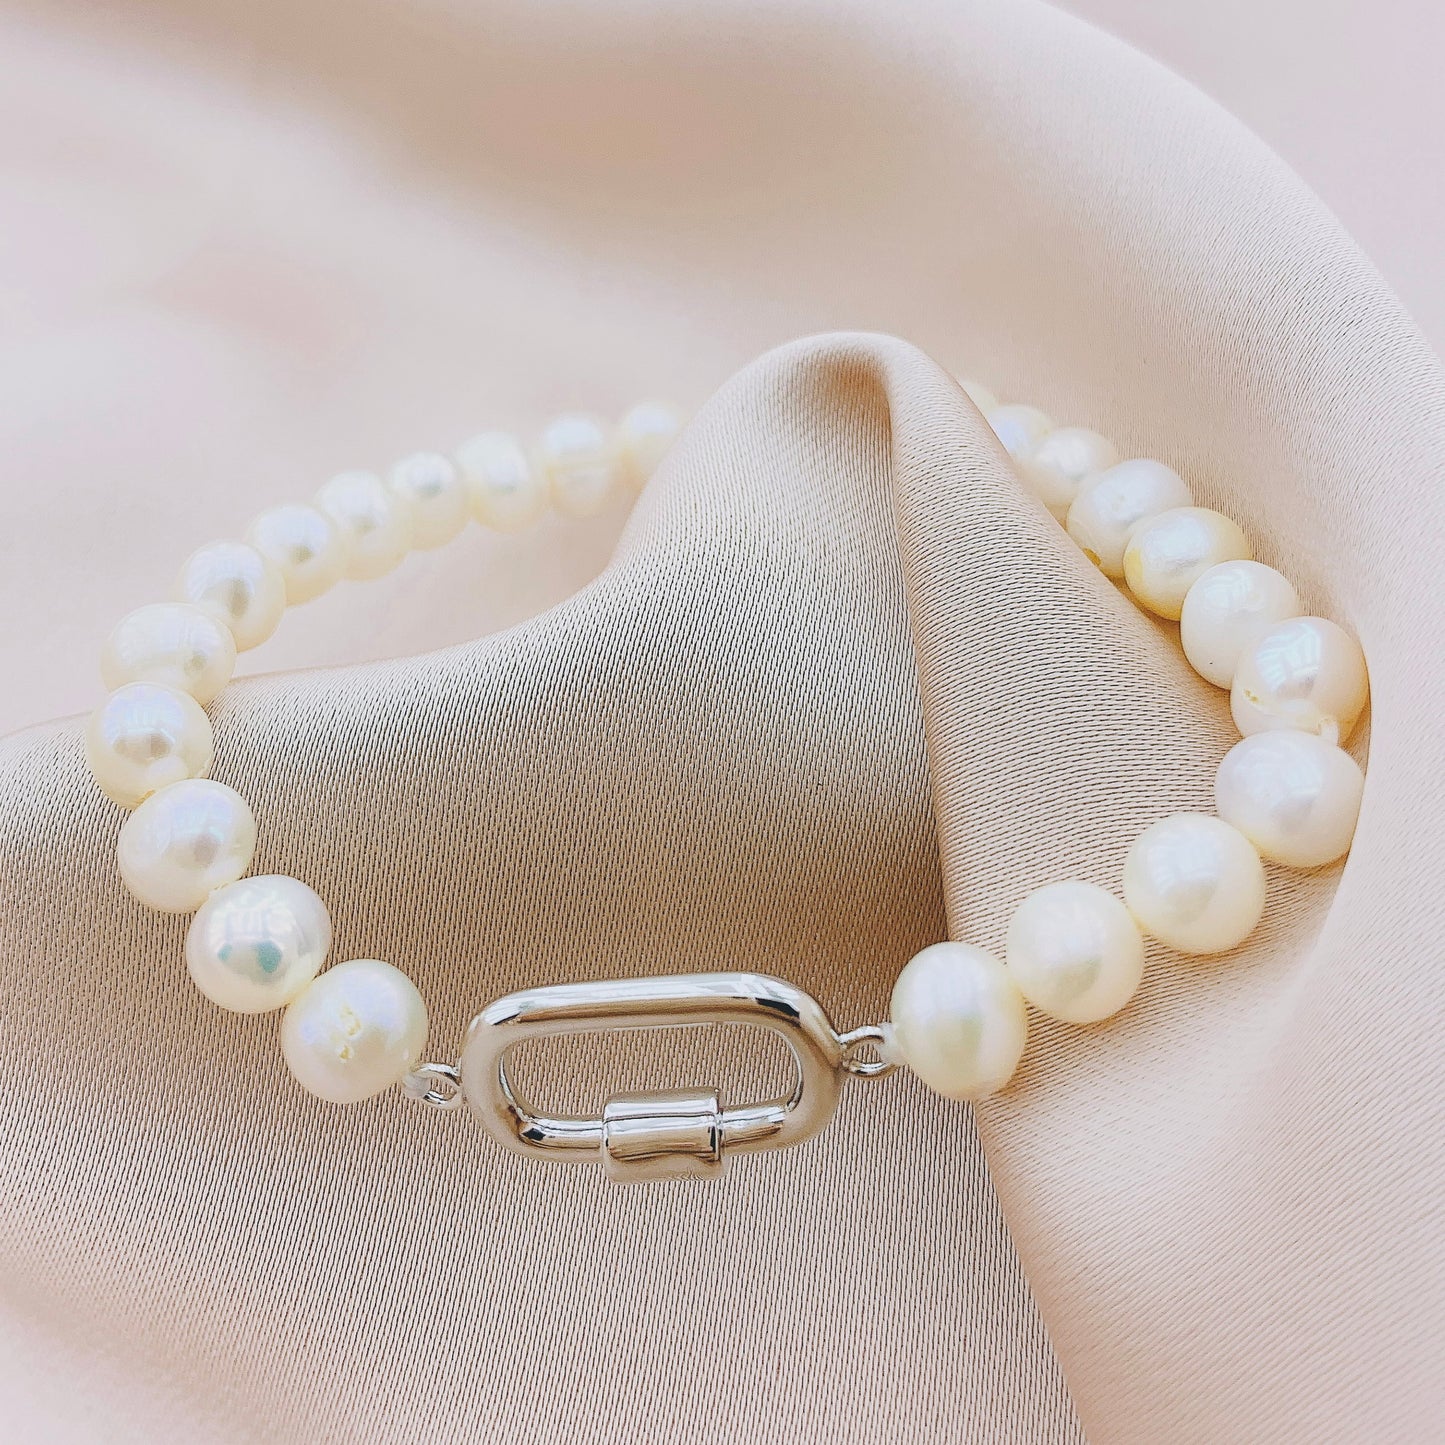 Women's Fashion Beads Pearl Stretch Bracelet